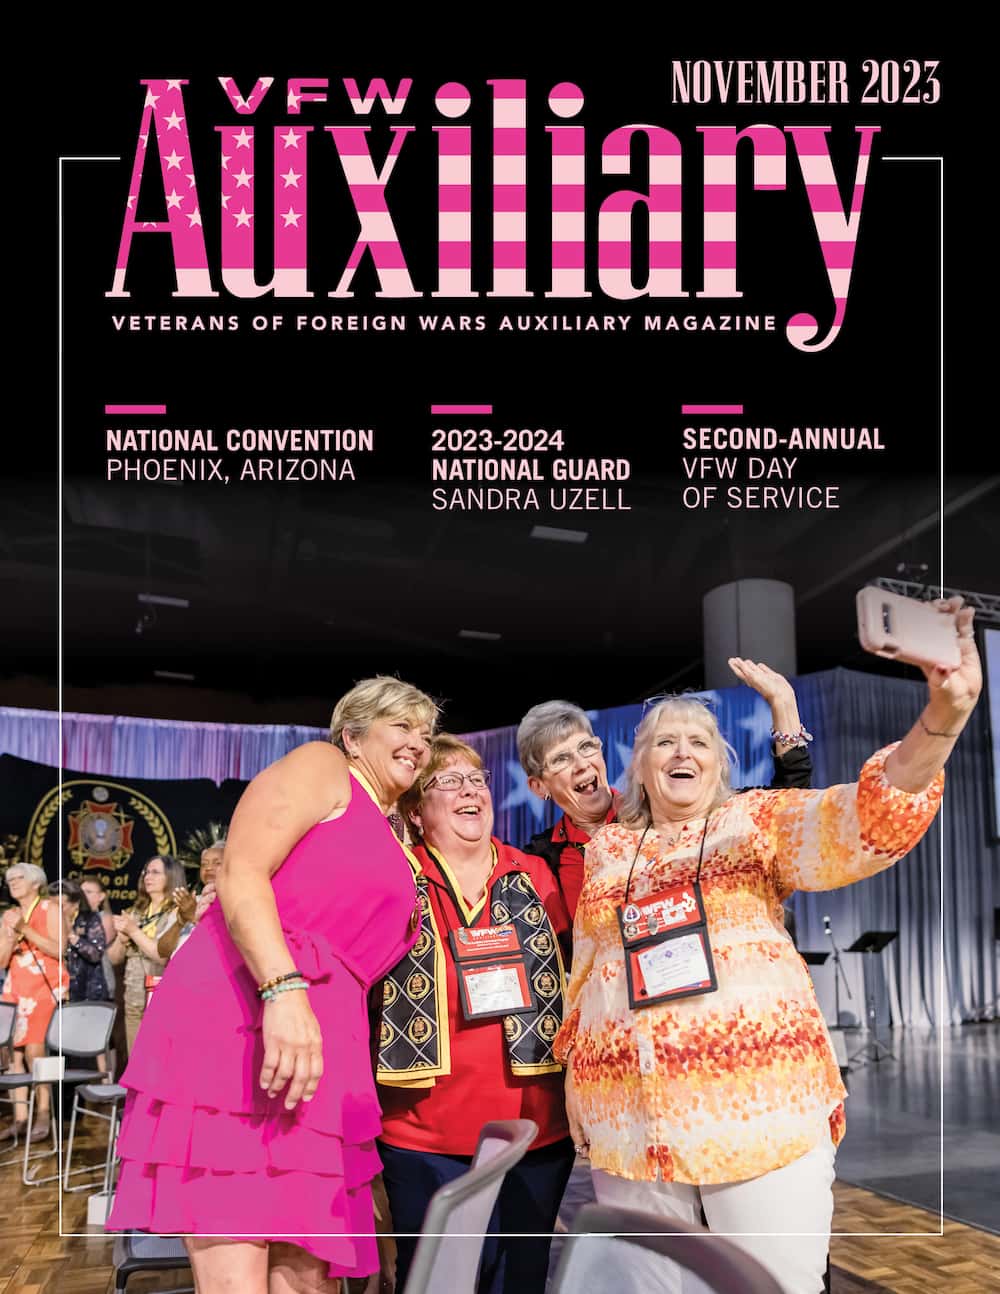 VFW Auxiliary Magazine, November 2023 cover.